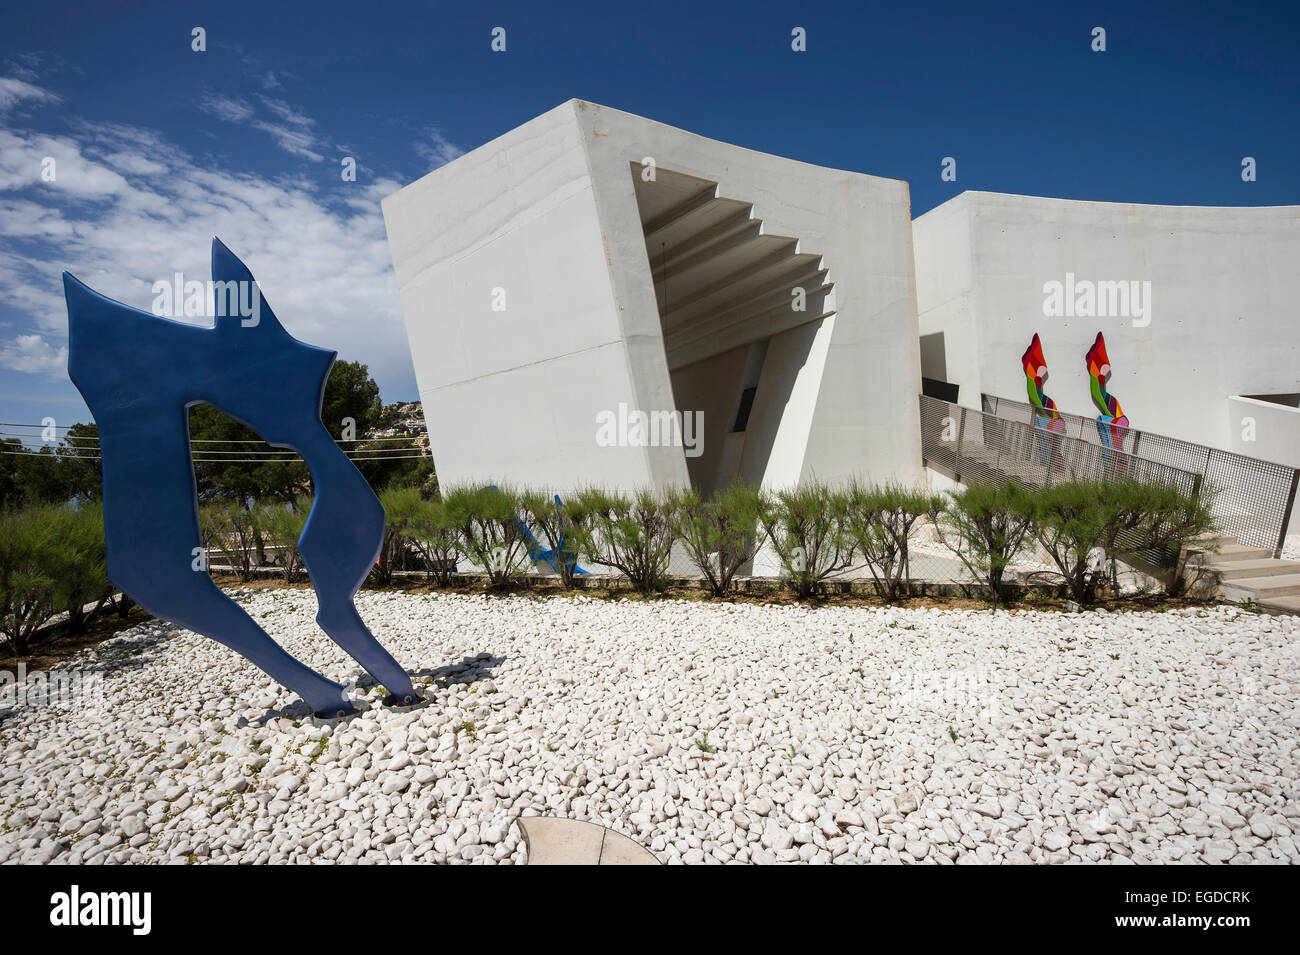 Studio Weil, l'architecte Daniel Libeskind, Port d'Andratx, Majorque, Espagne Banque D'Images